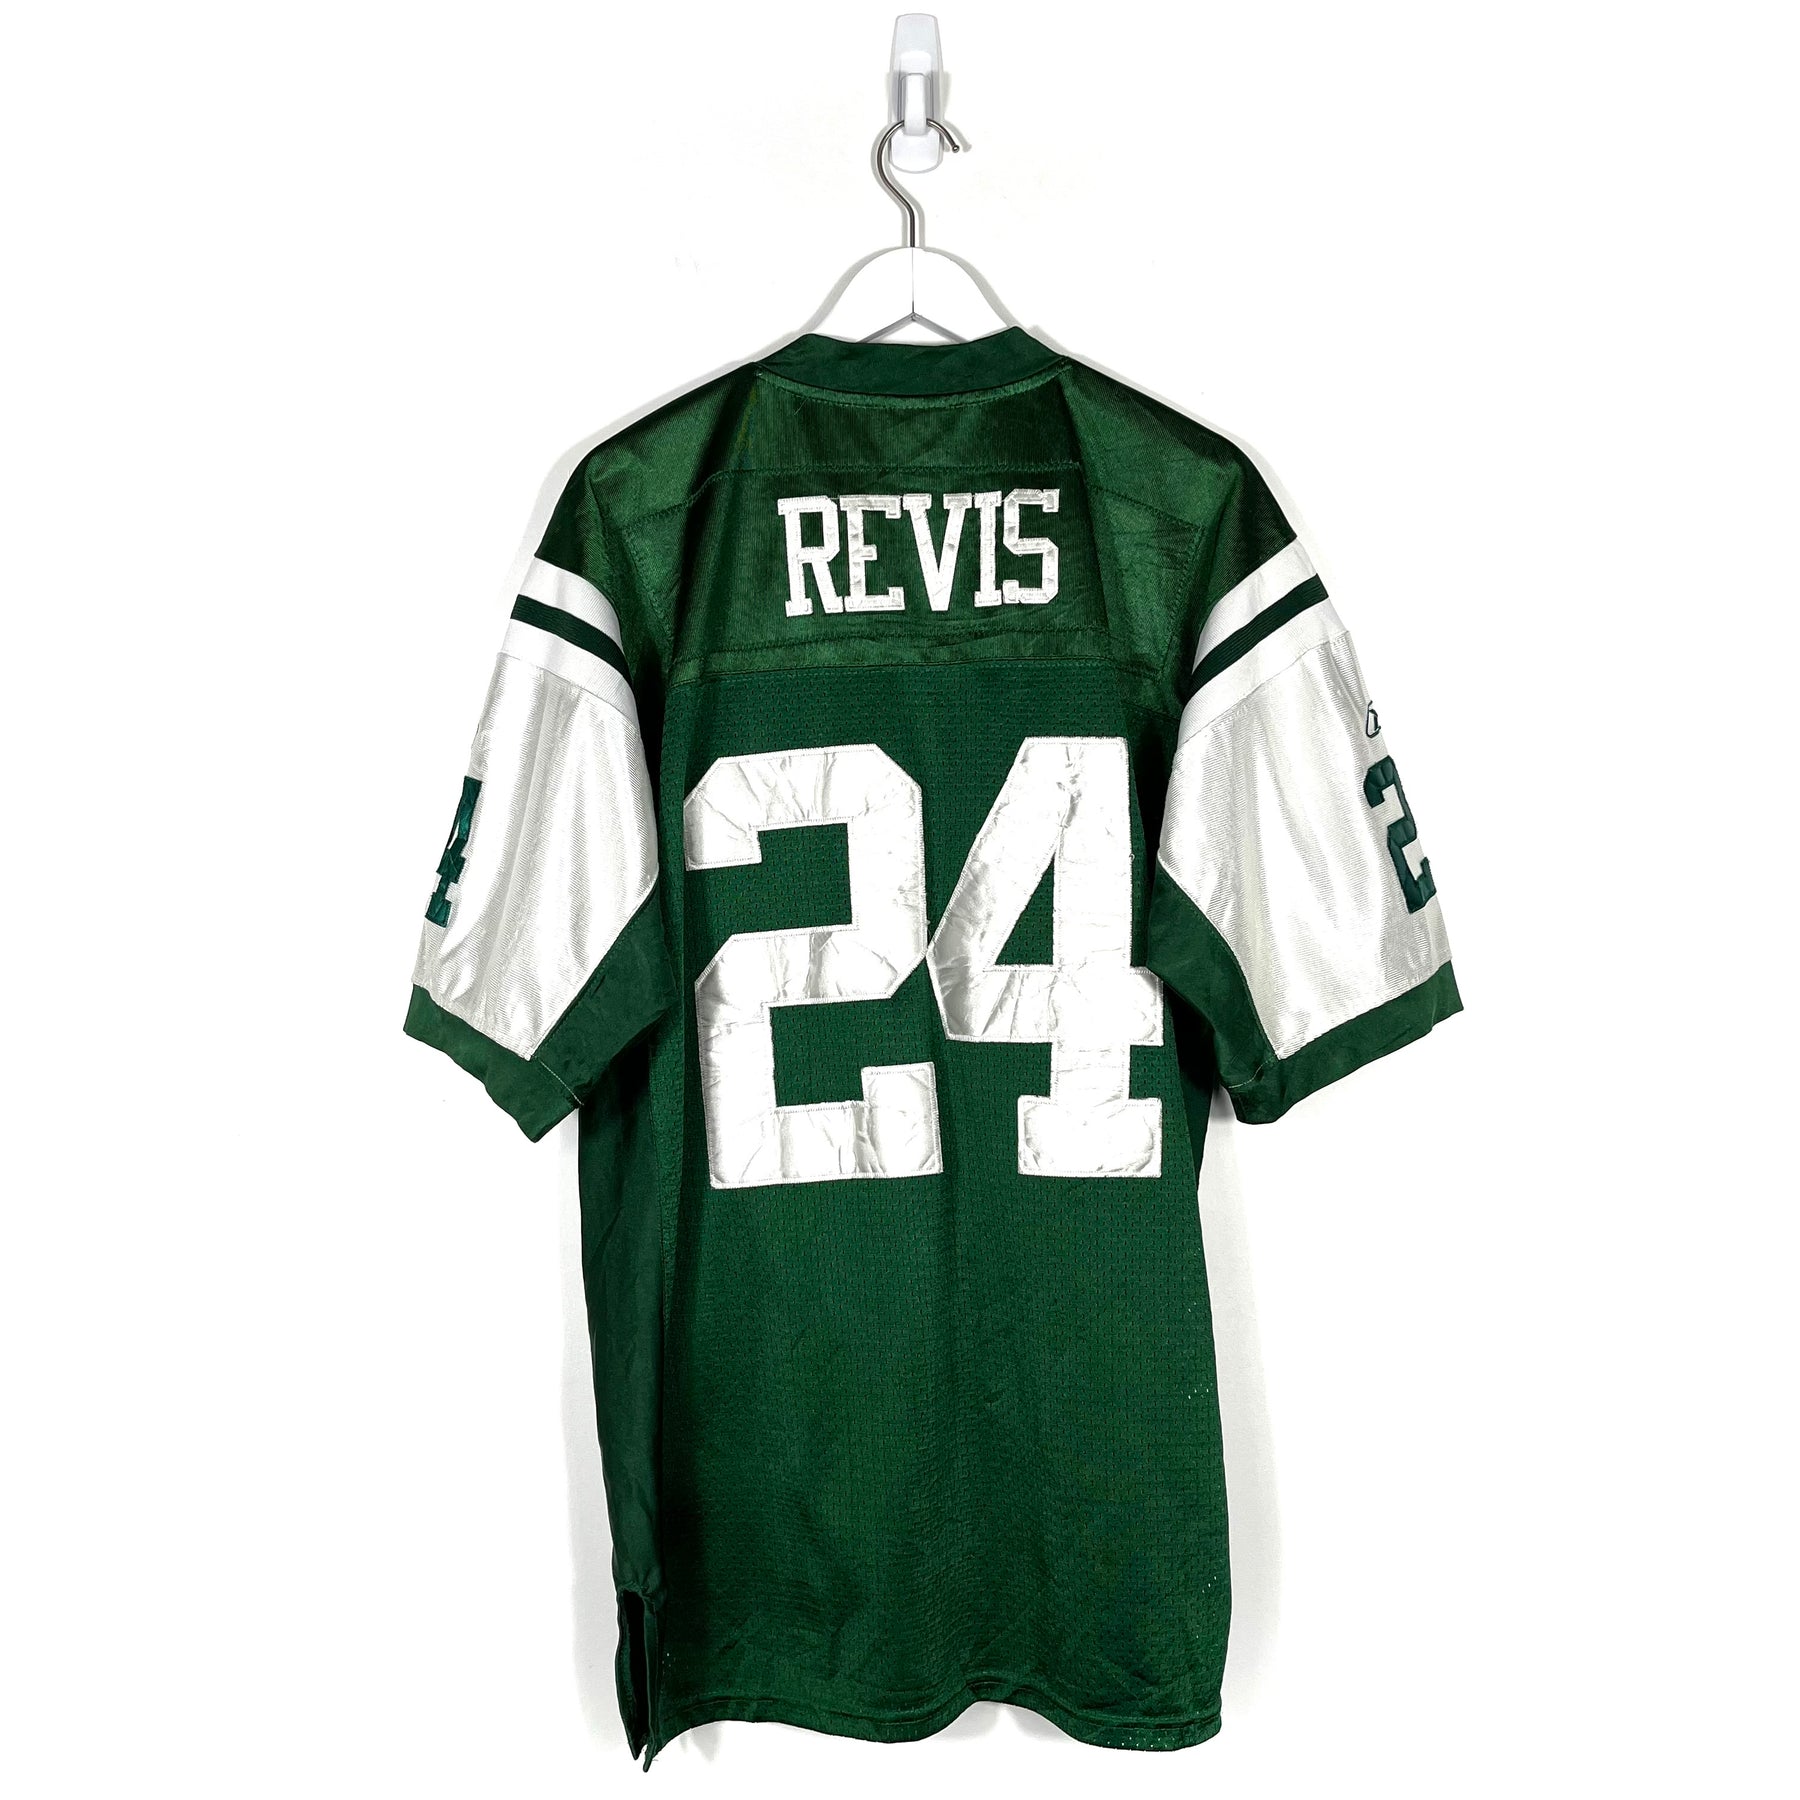 Reebok NFL New York Jets Darrelle Revis #24 Jersey - Men's XL